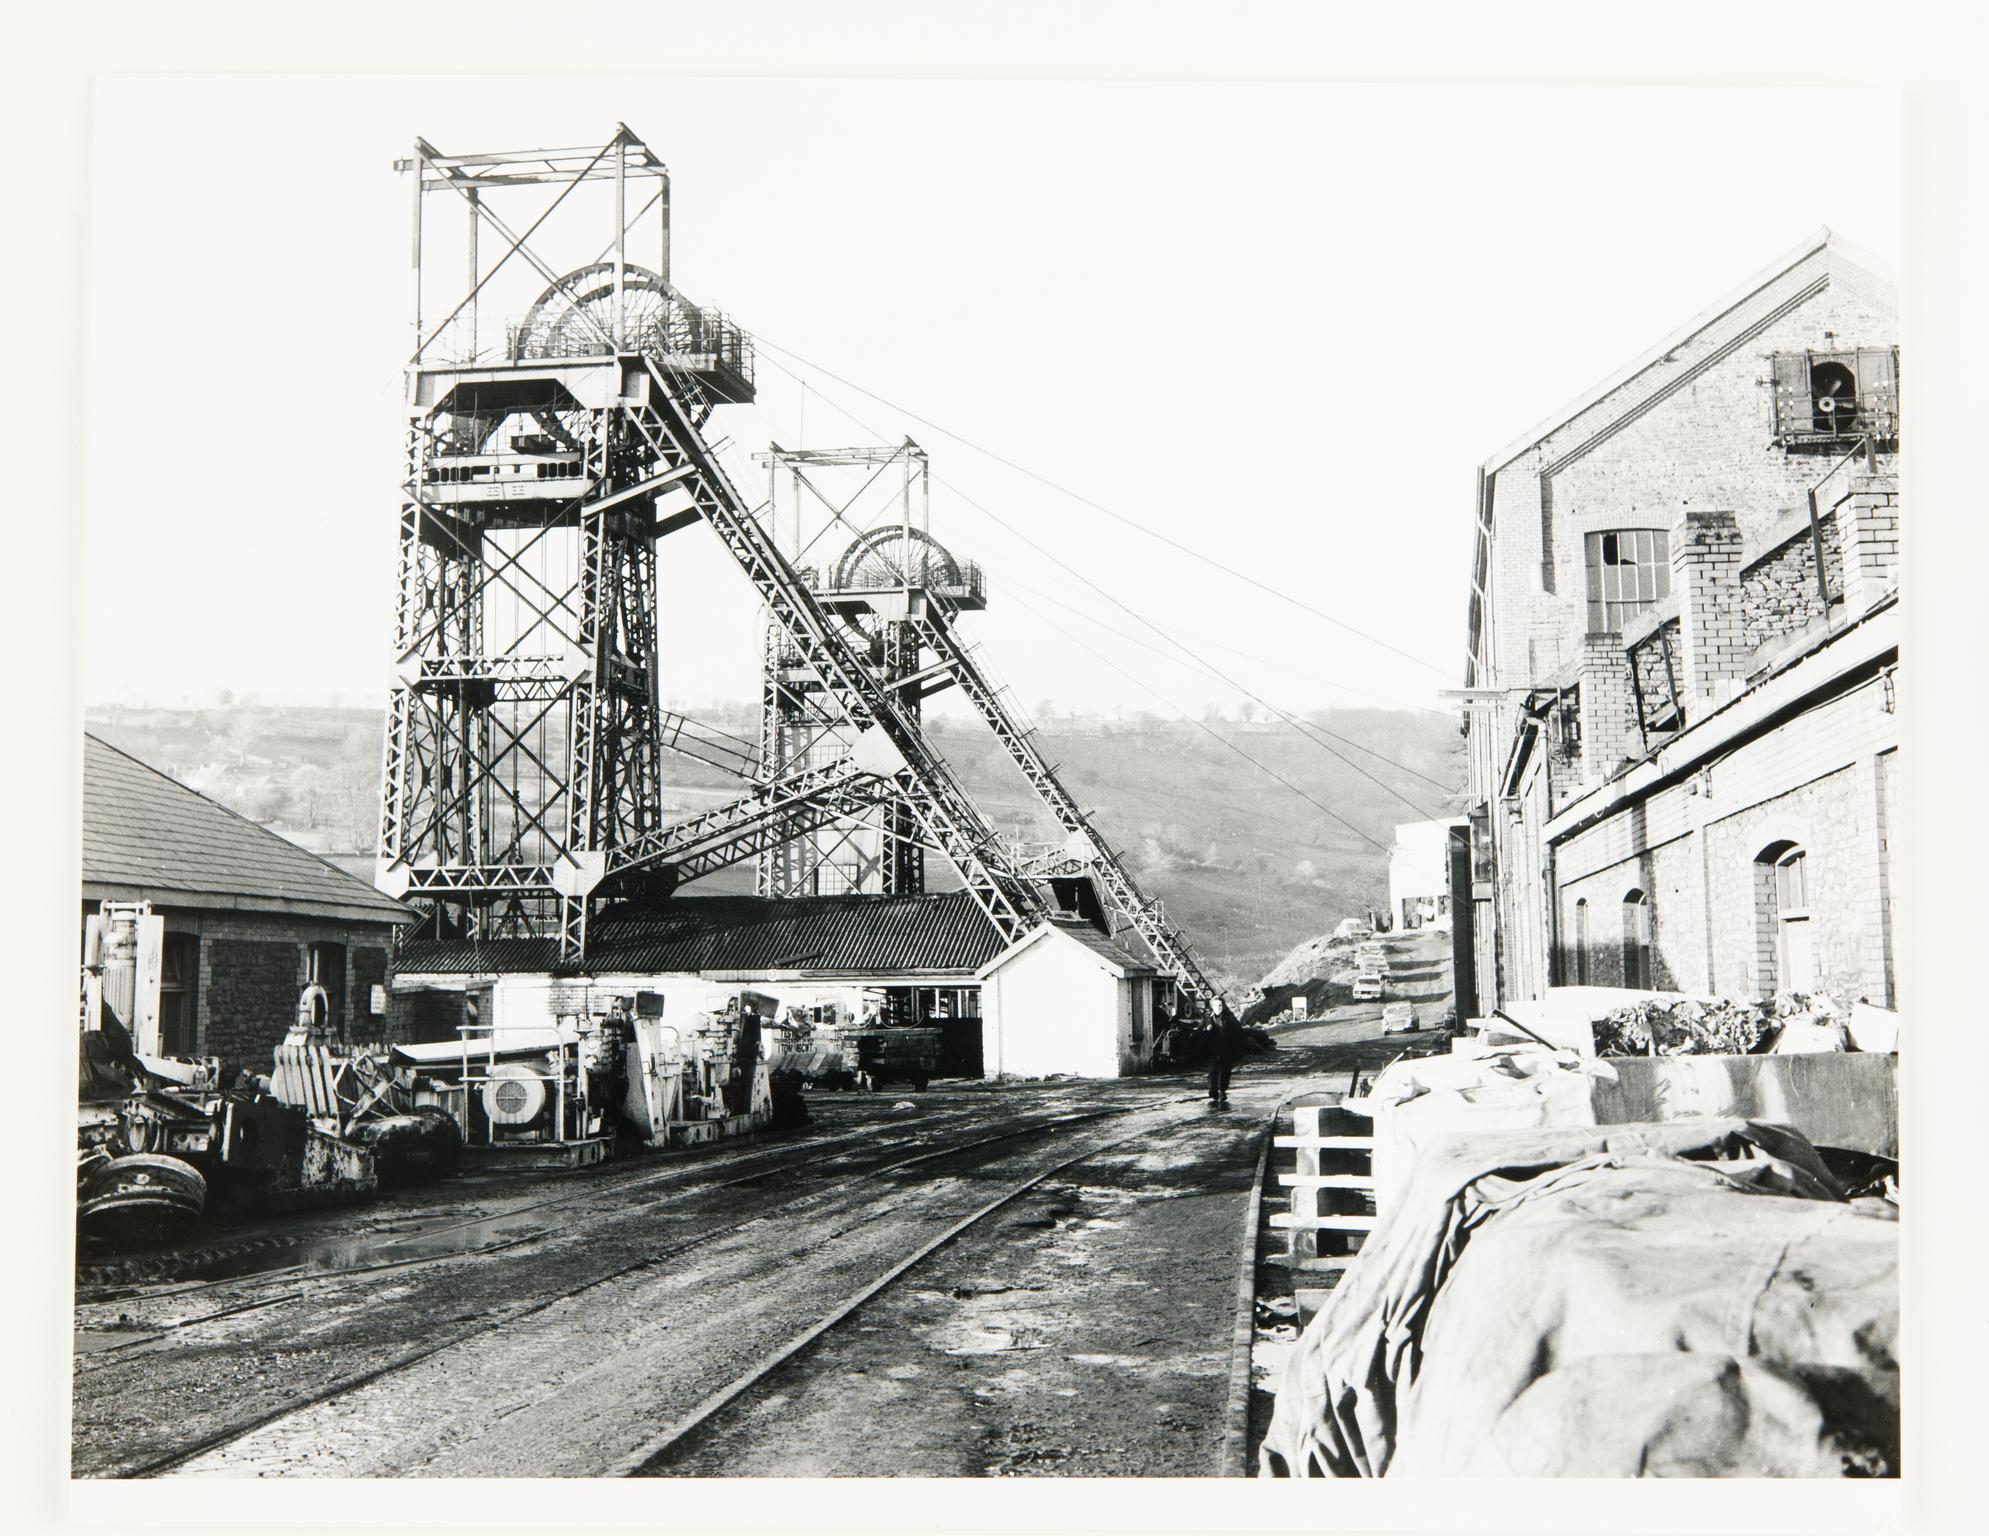 Markham Colliery, photograph